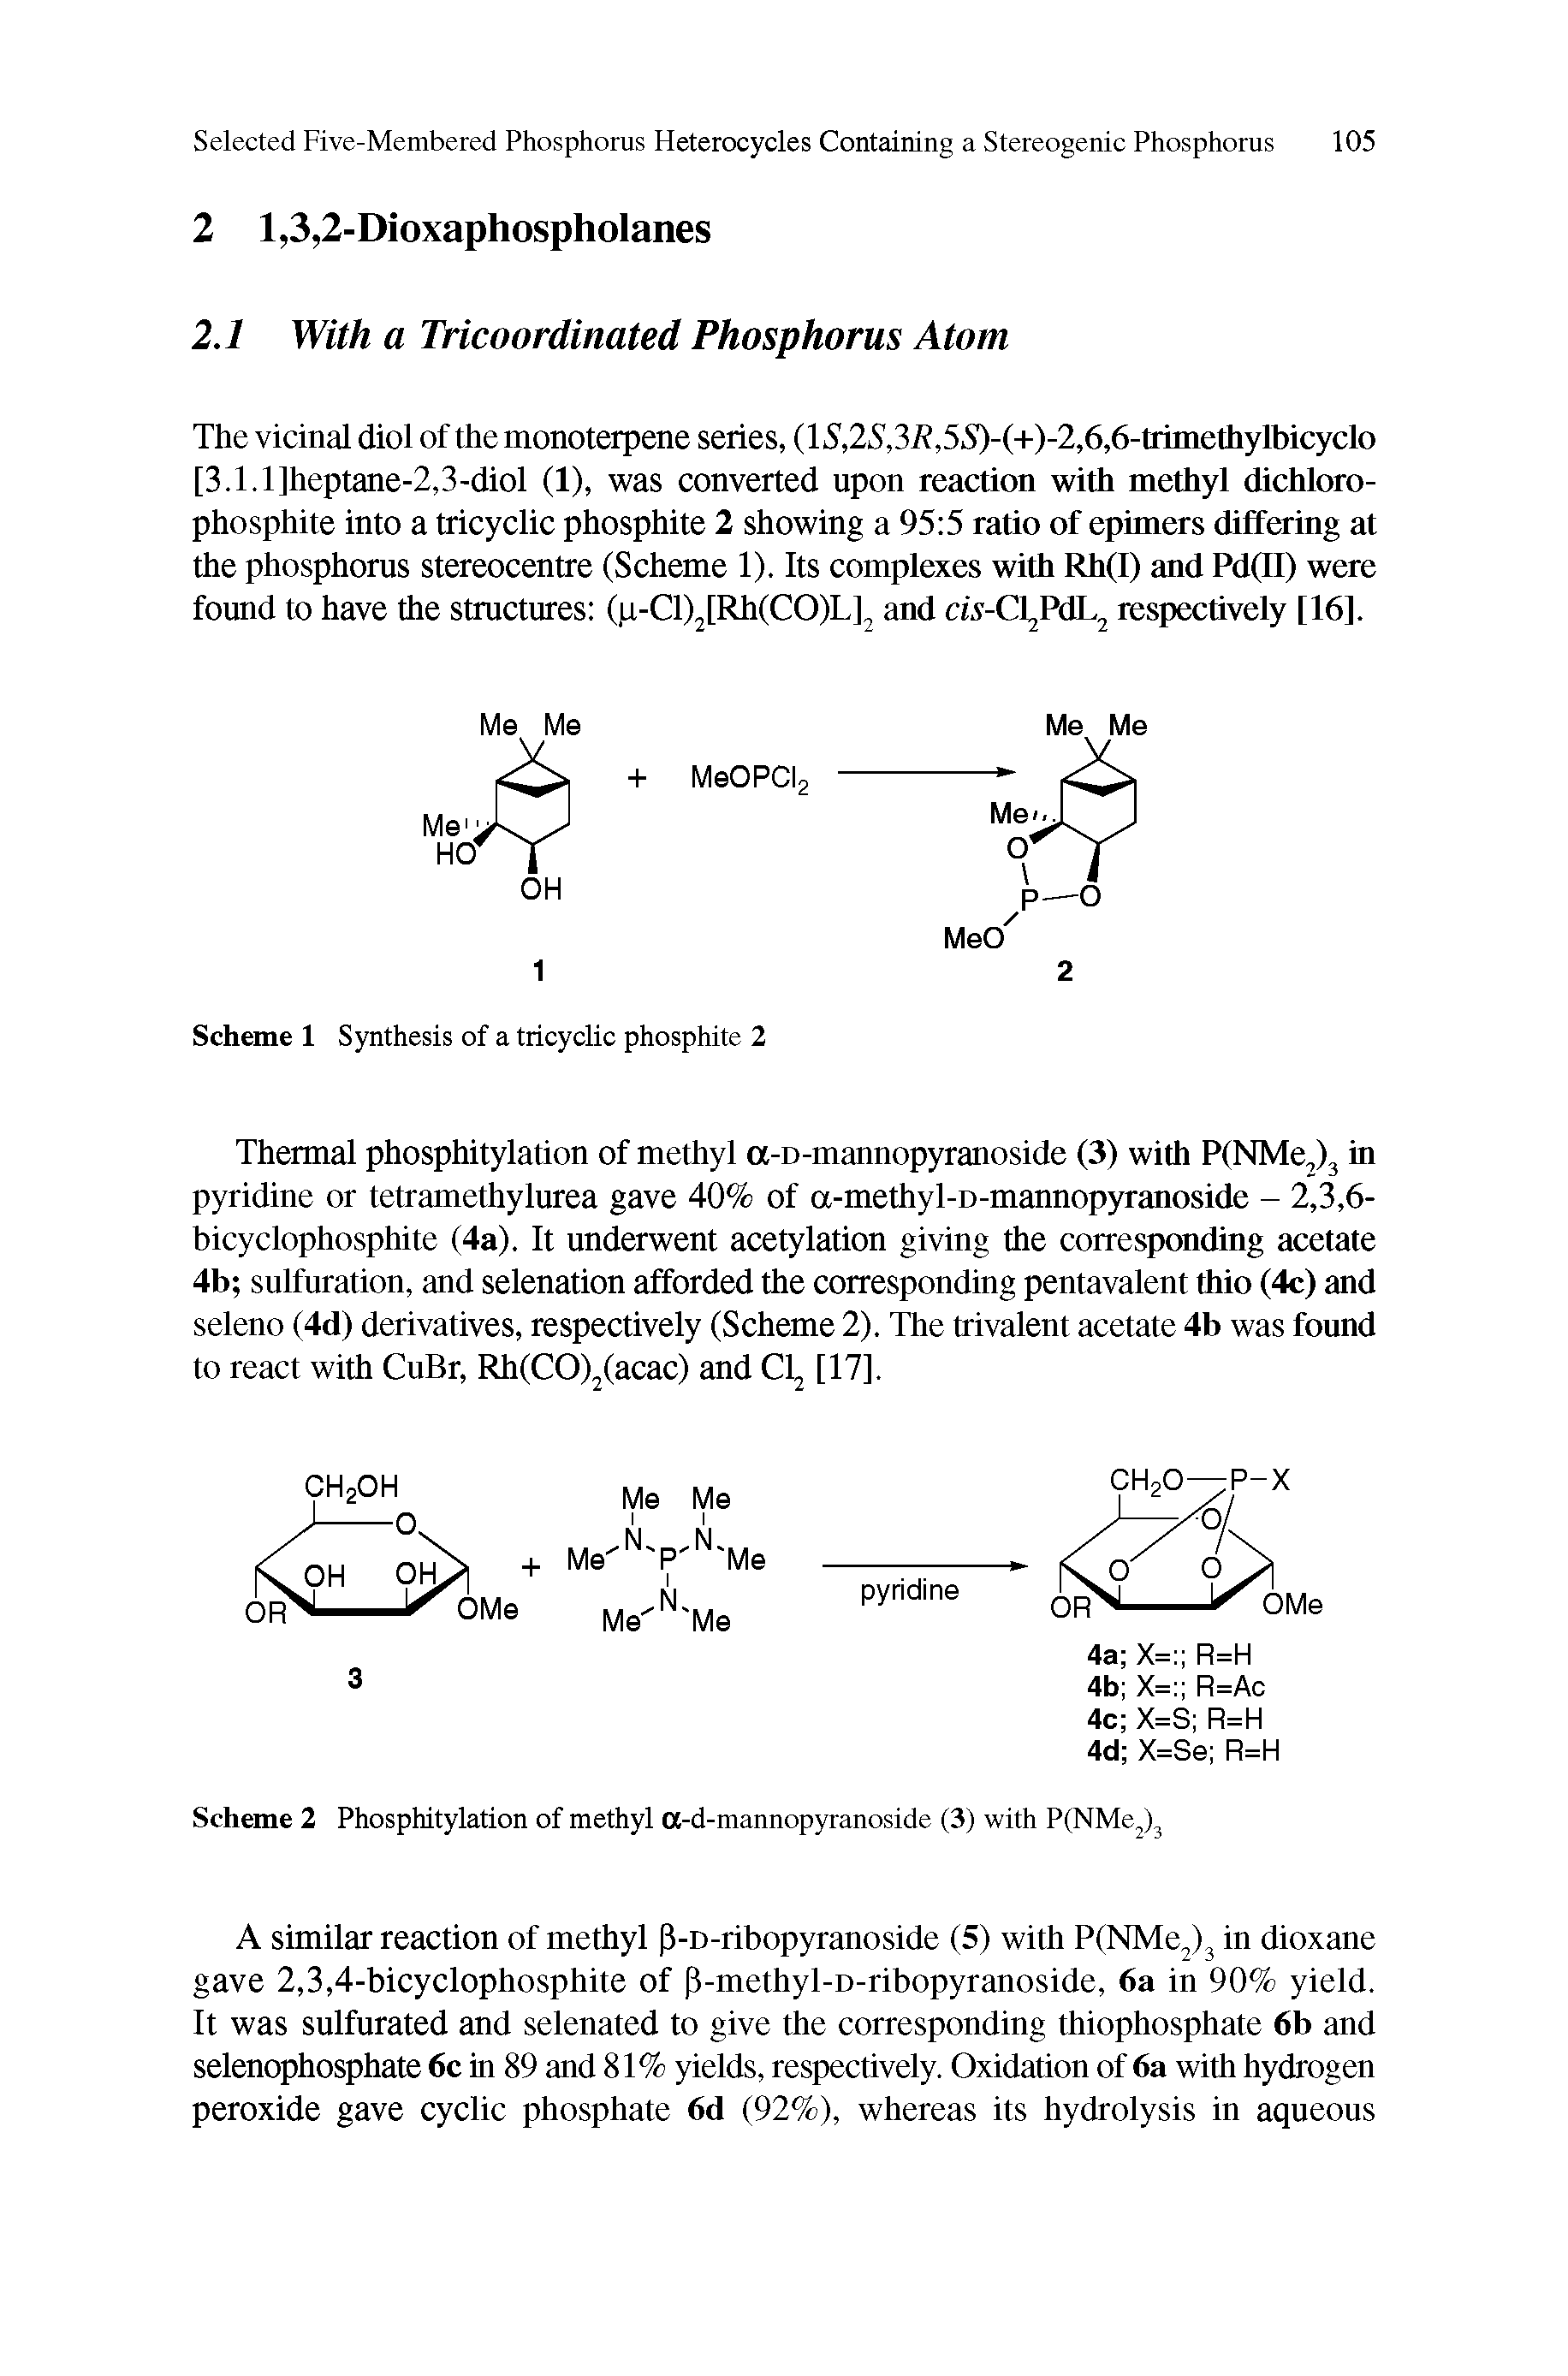 Scheme 2 Phosphitylation of methyl (X-d-mannopyranoside (3) with P(NMe2)3...